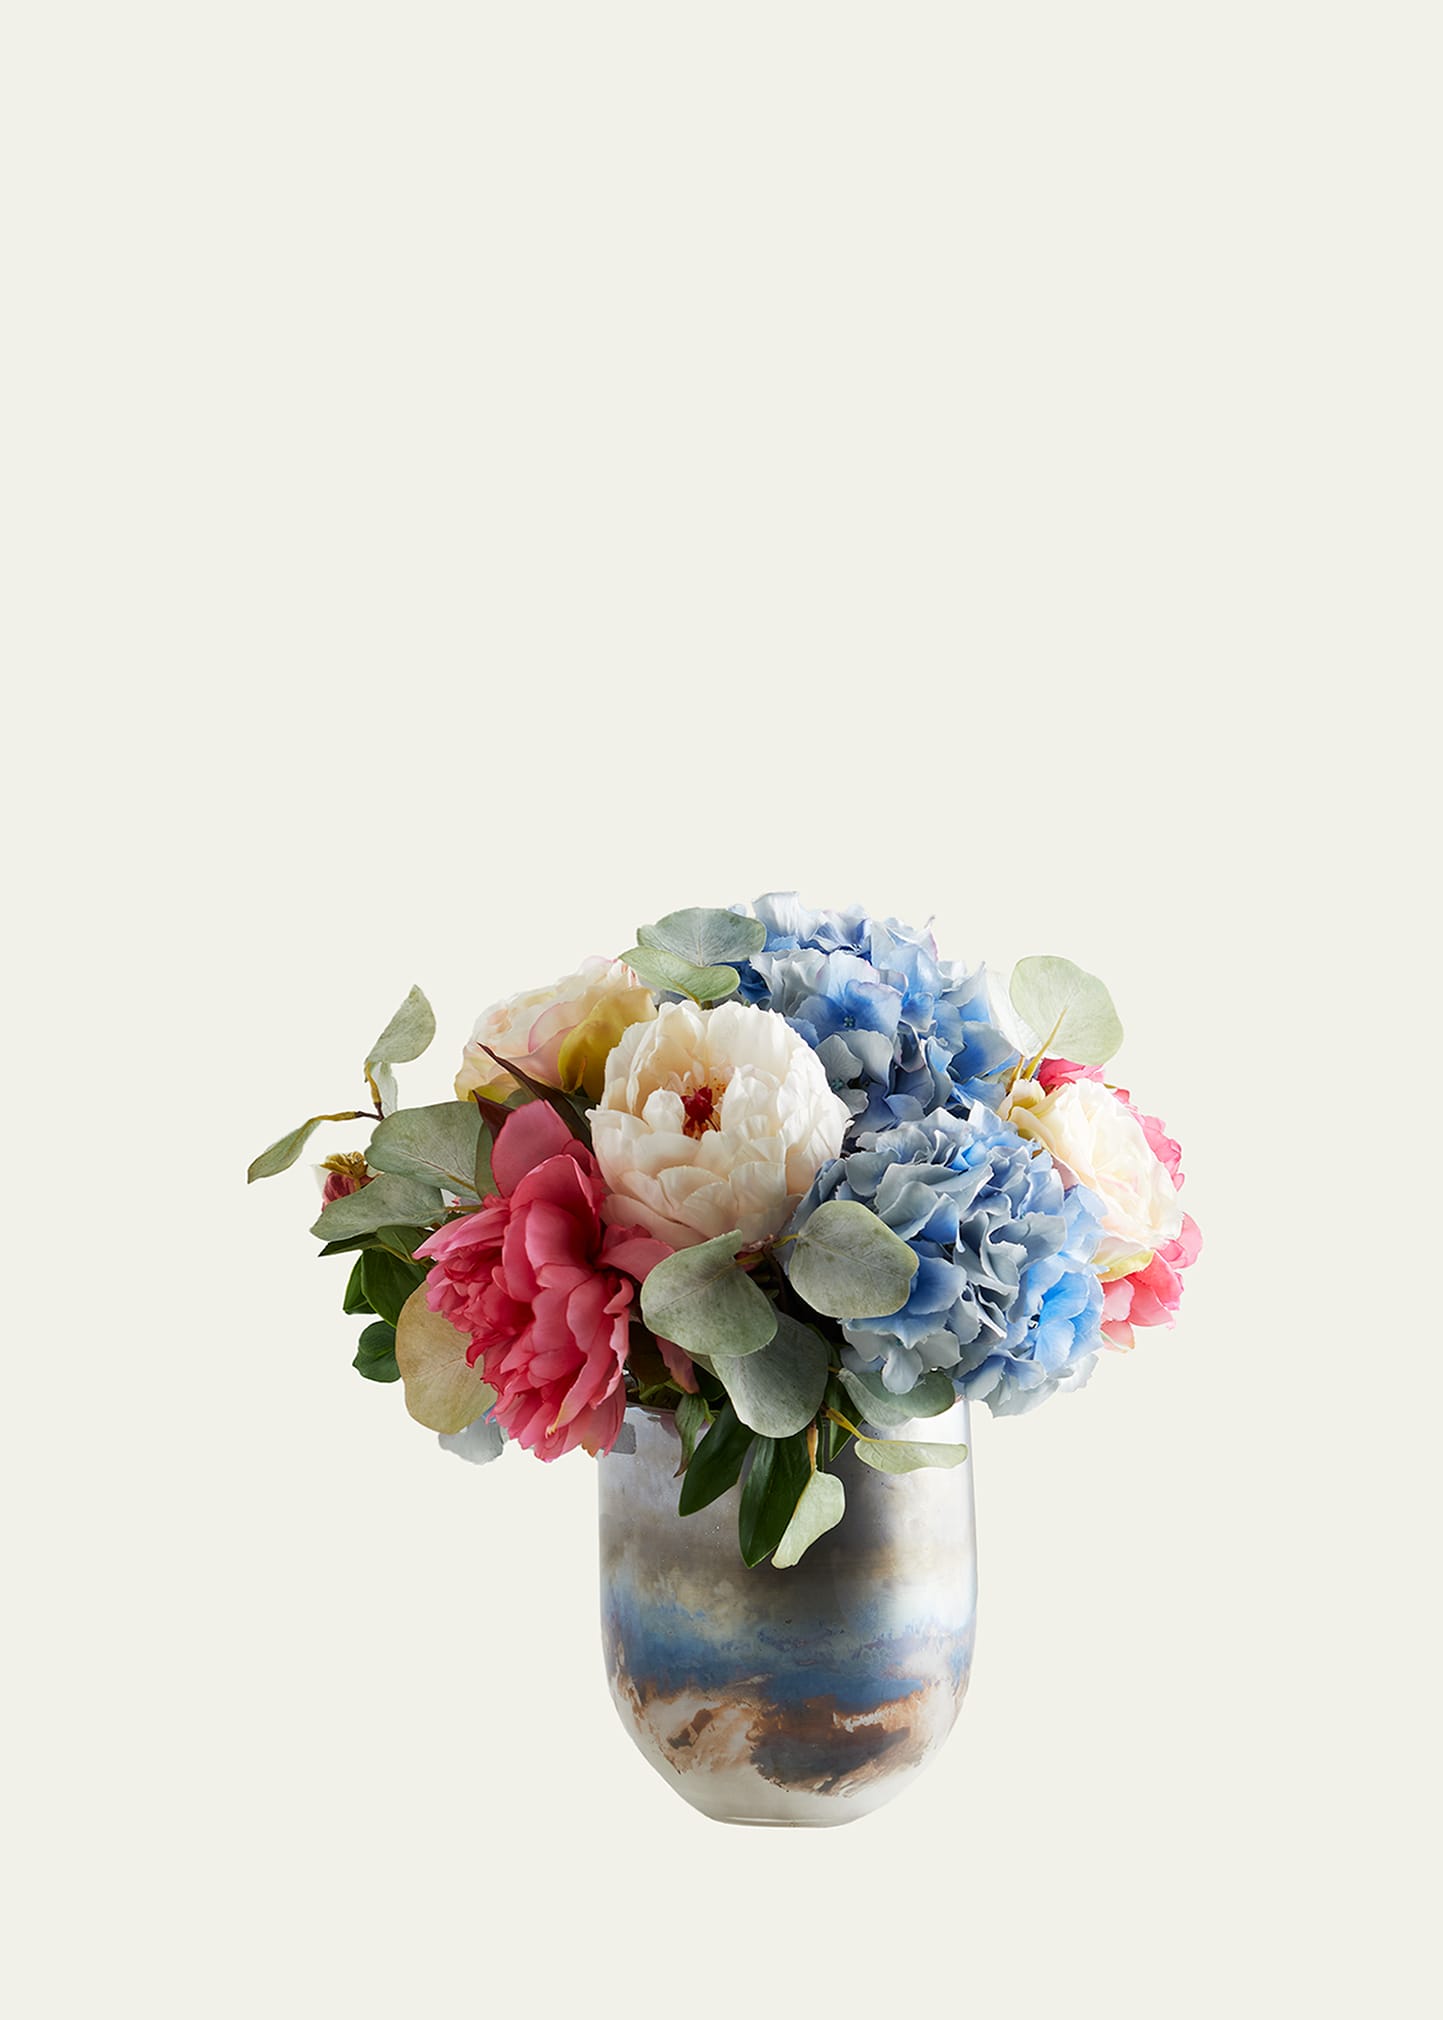 Blushing Ocean 15" Faux Floral Arrangement in Mercury Glass Vase